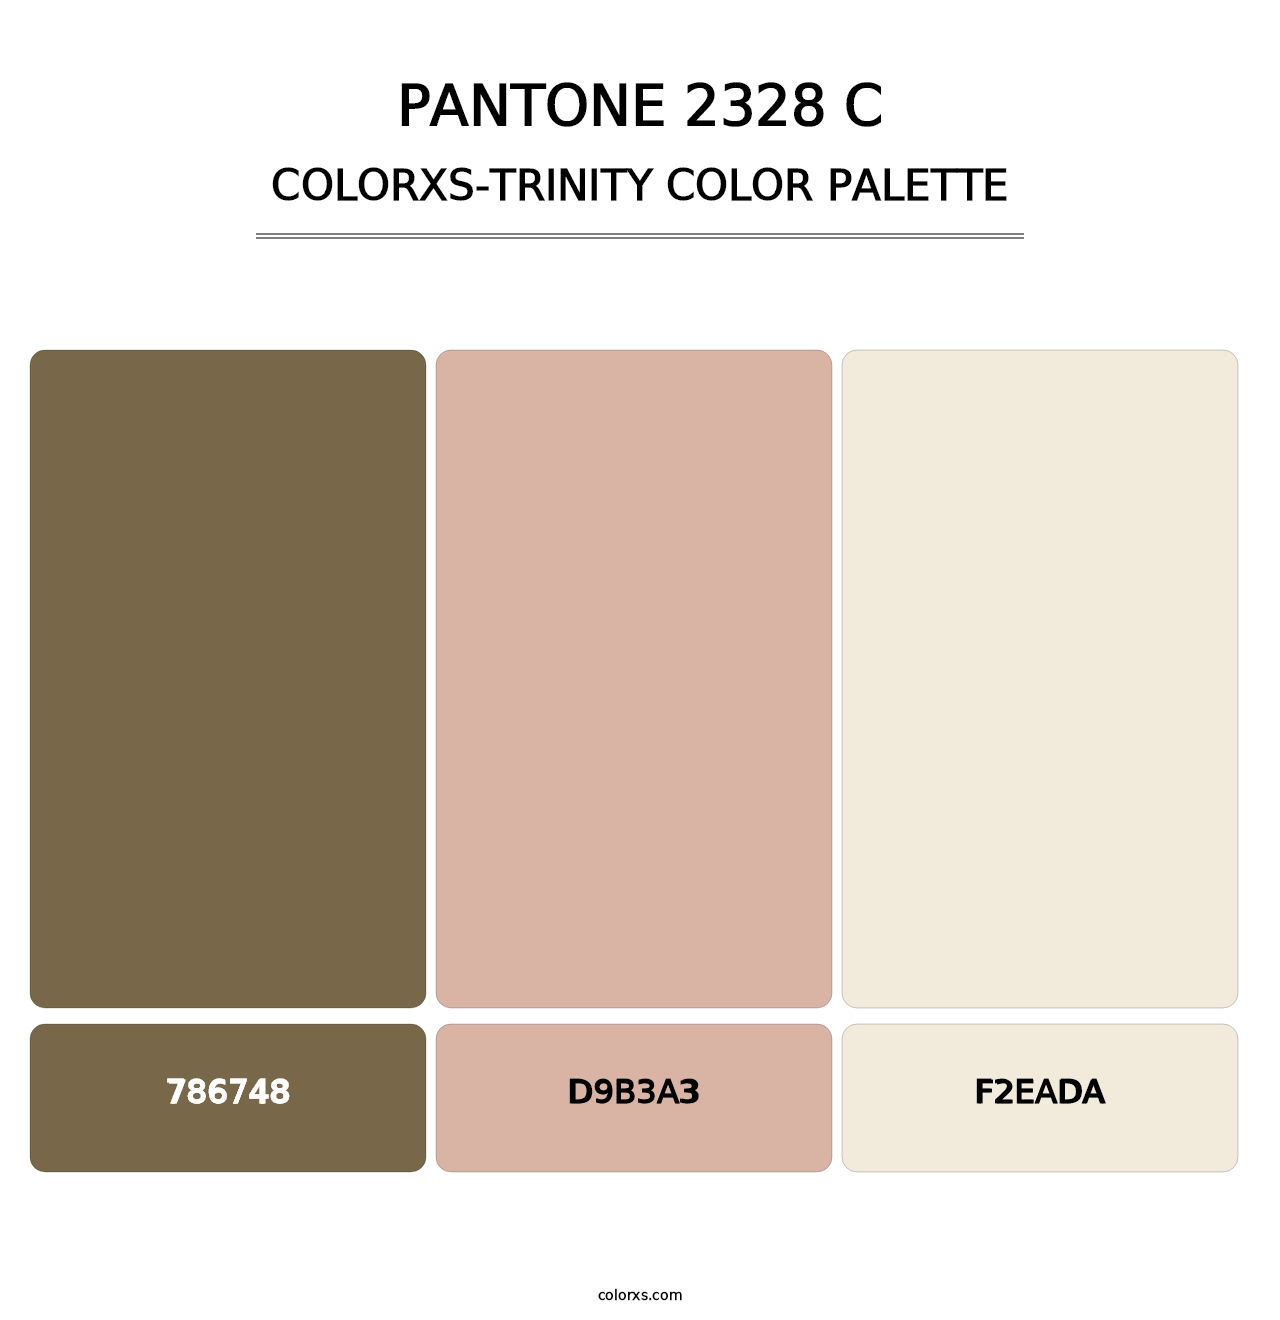 PANTONE 2328 C - Colorxs Trinity Palette